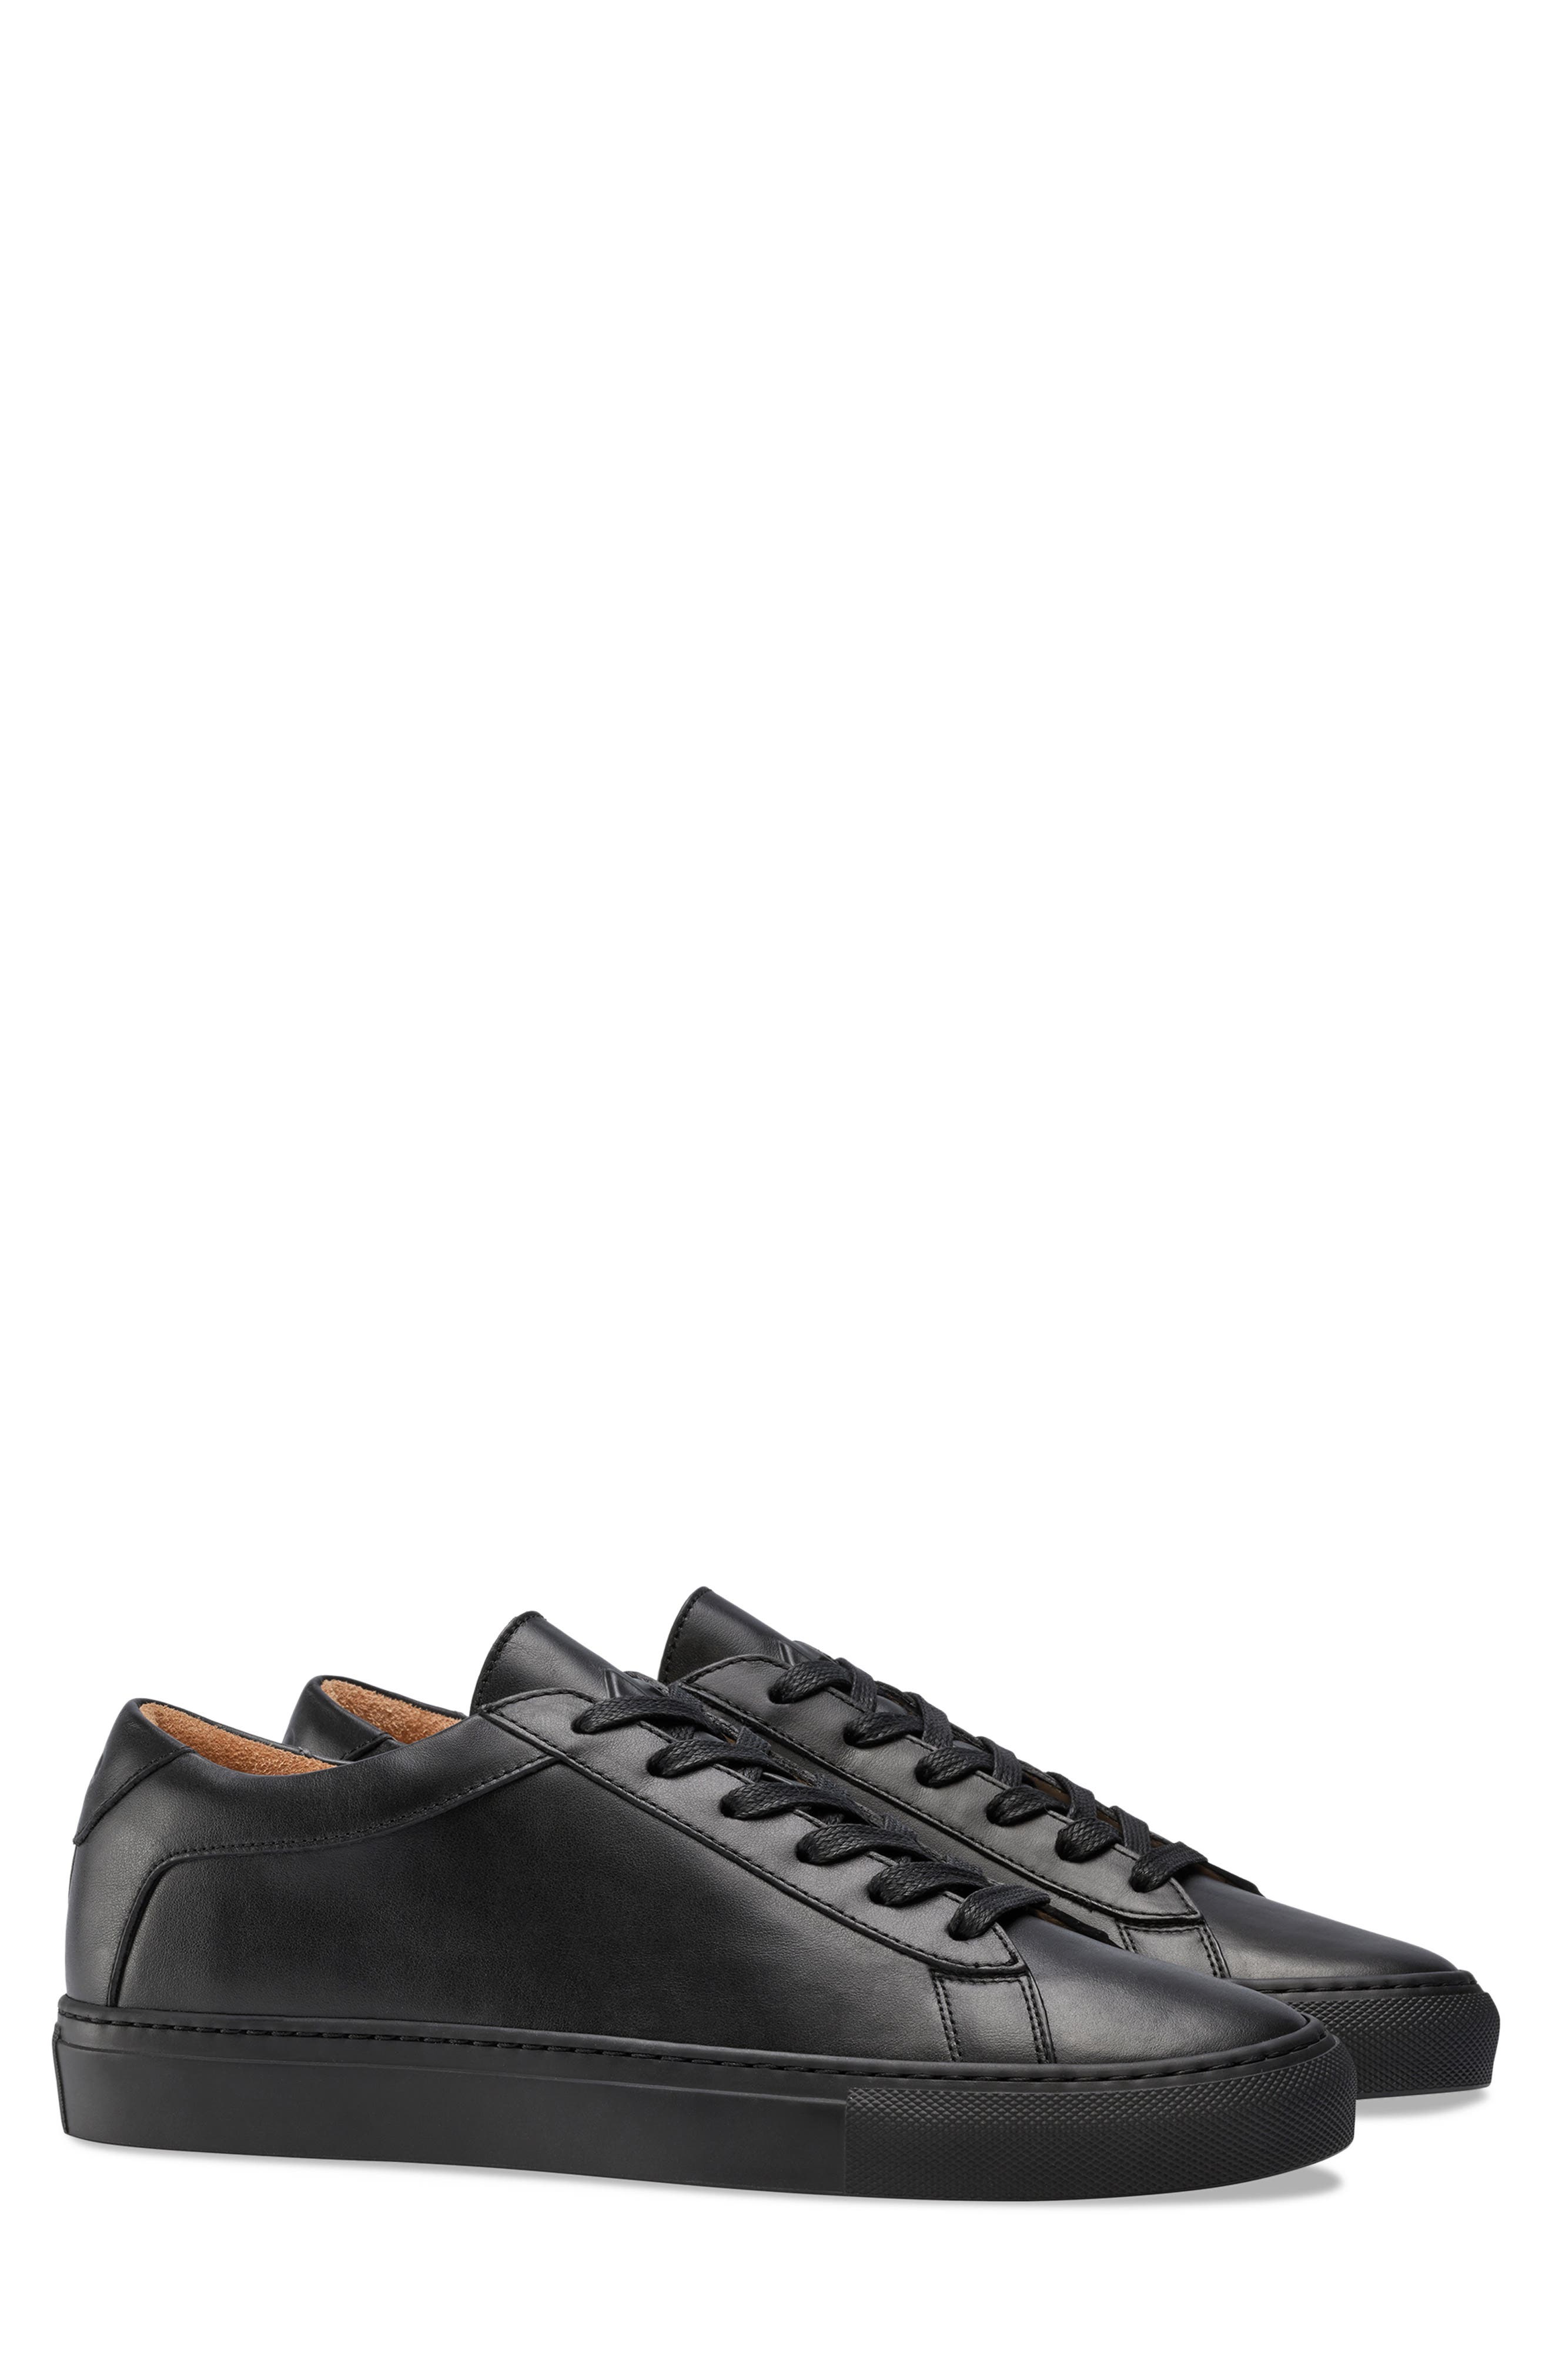 black dress tennis shoes